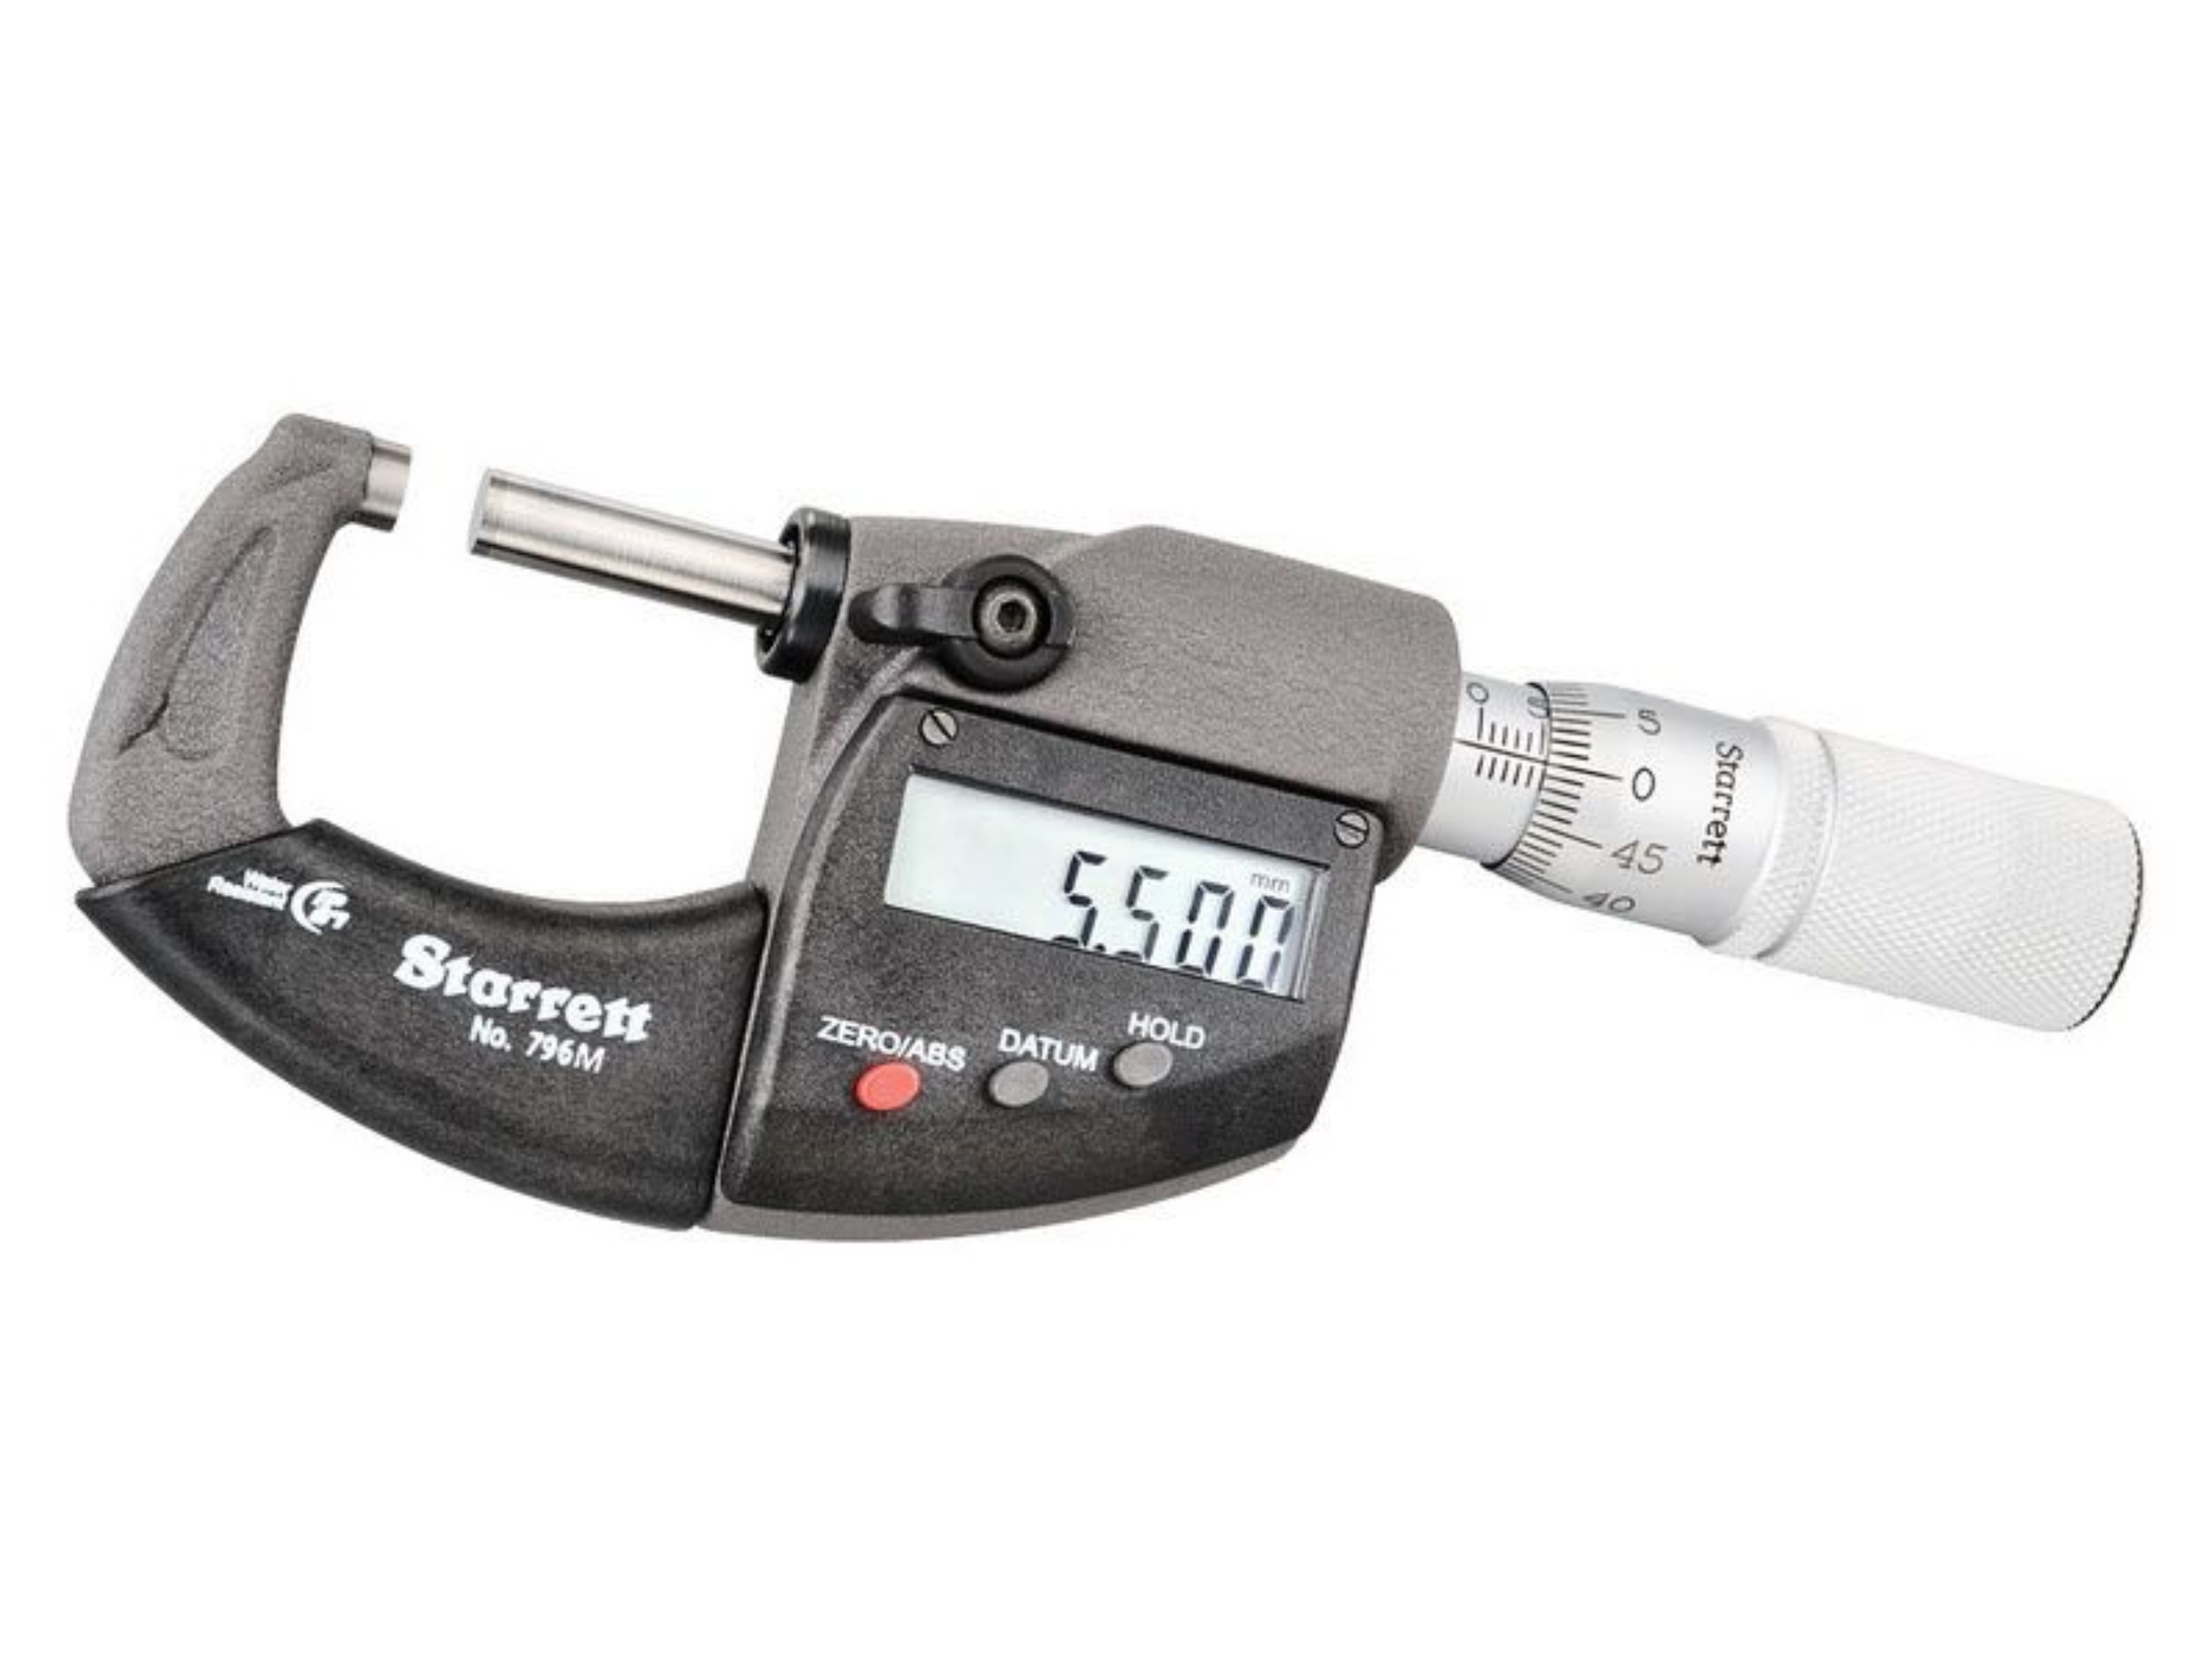 Warehouse Clearance Item: Digital Micrometer 25-50mm (1-2") IP67